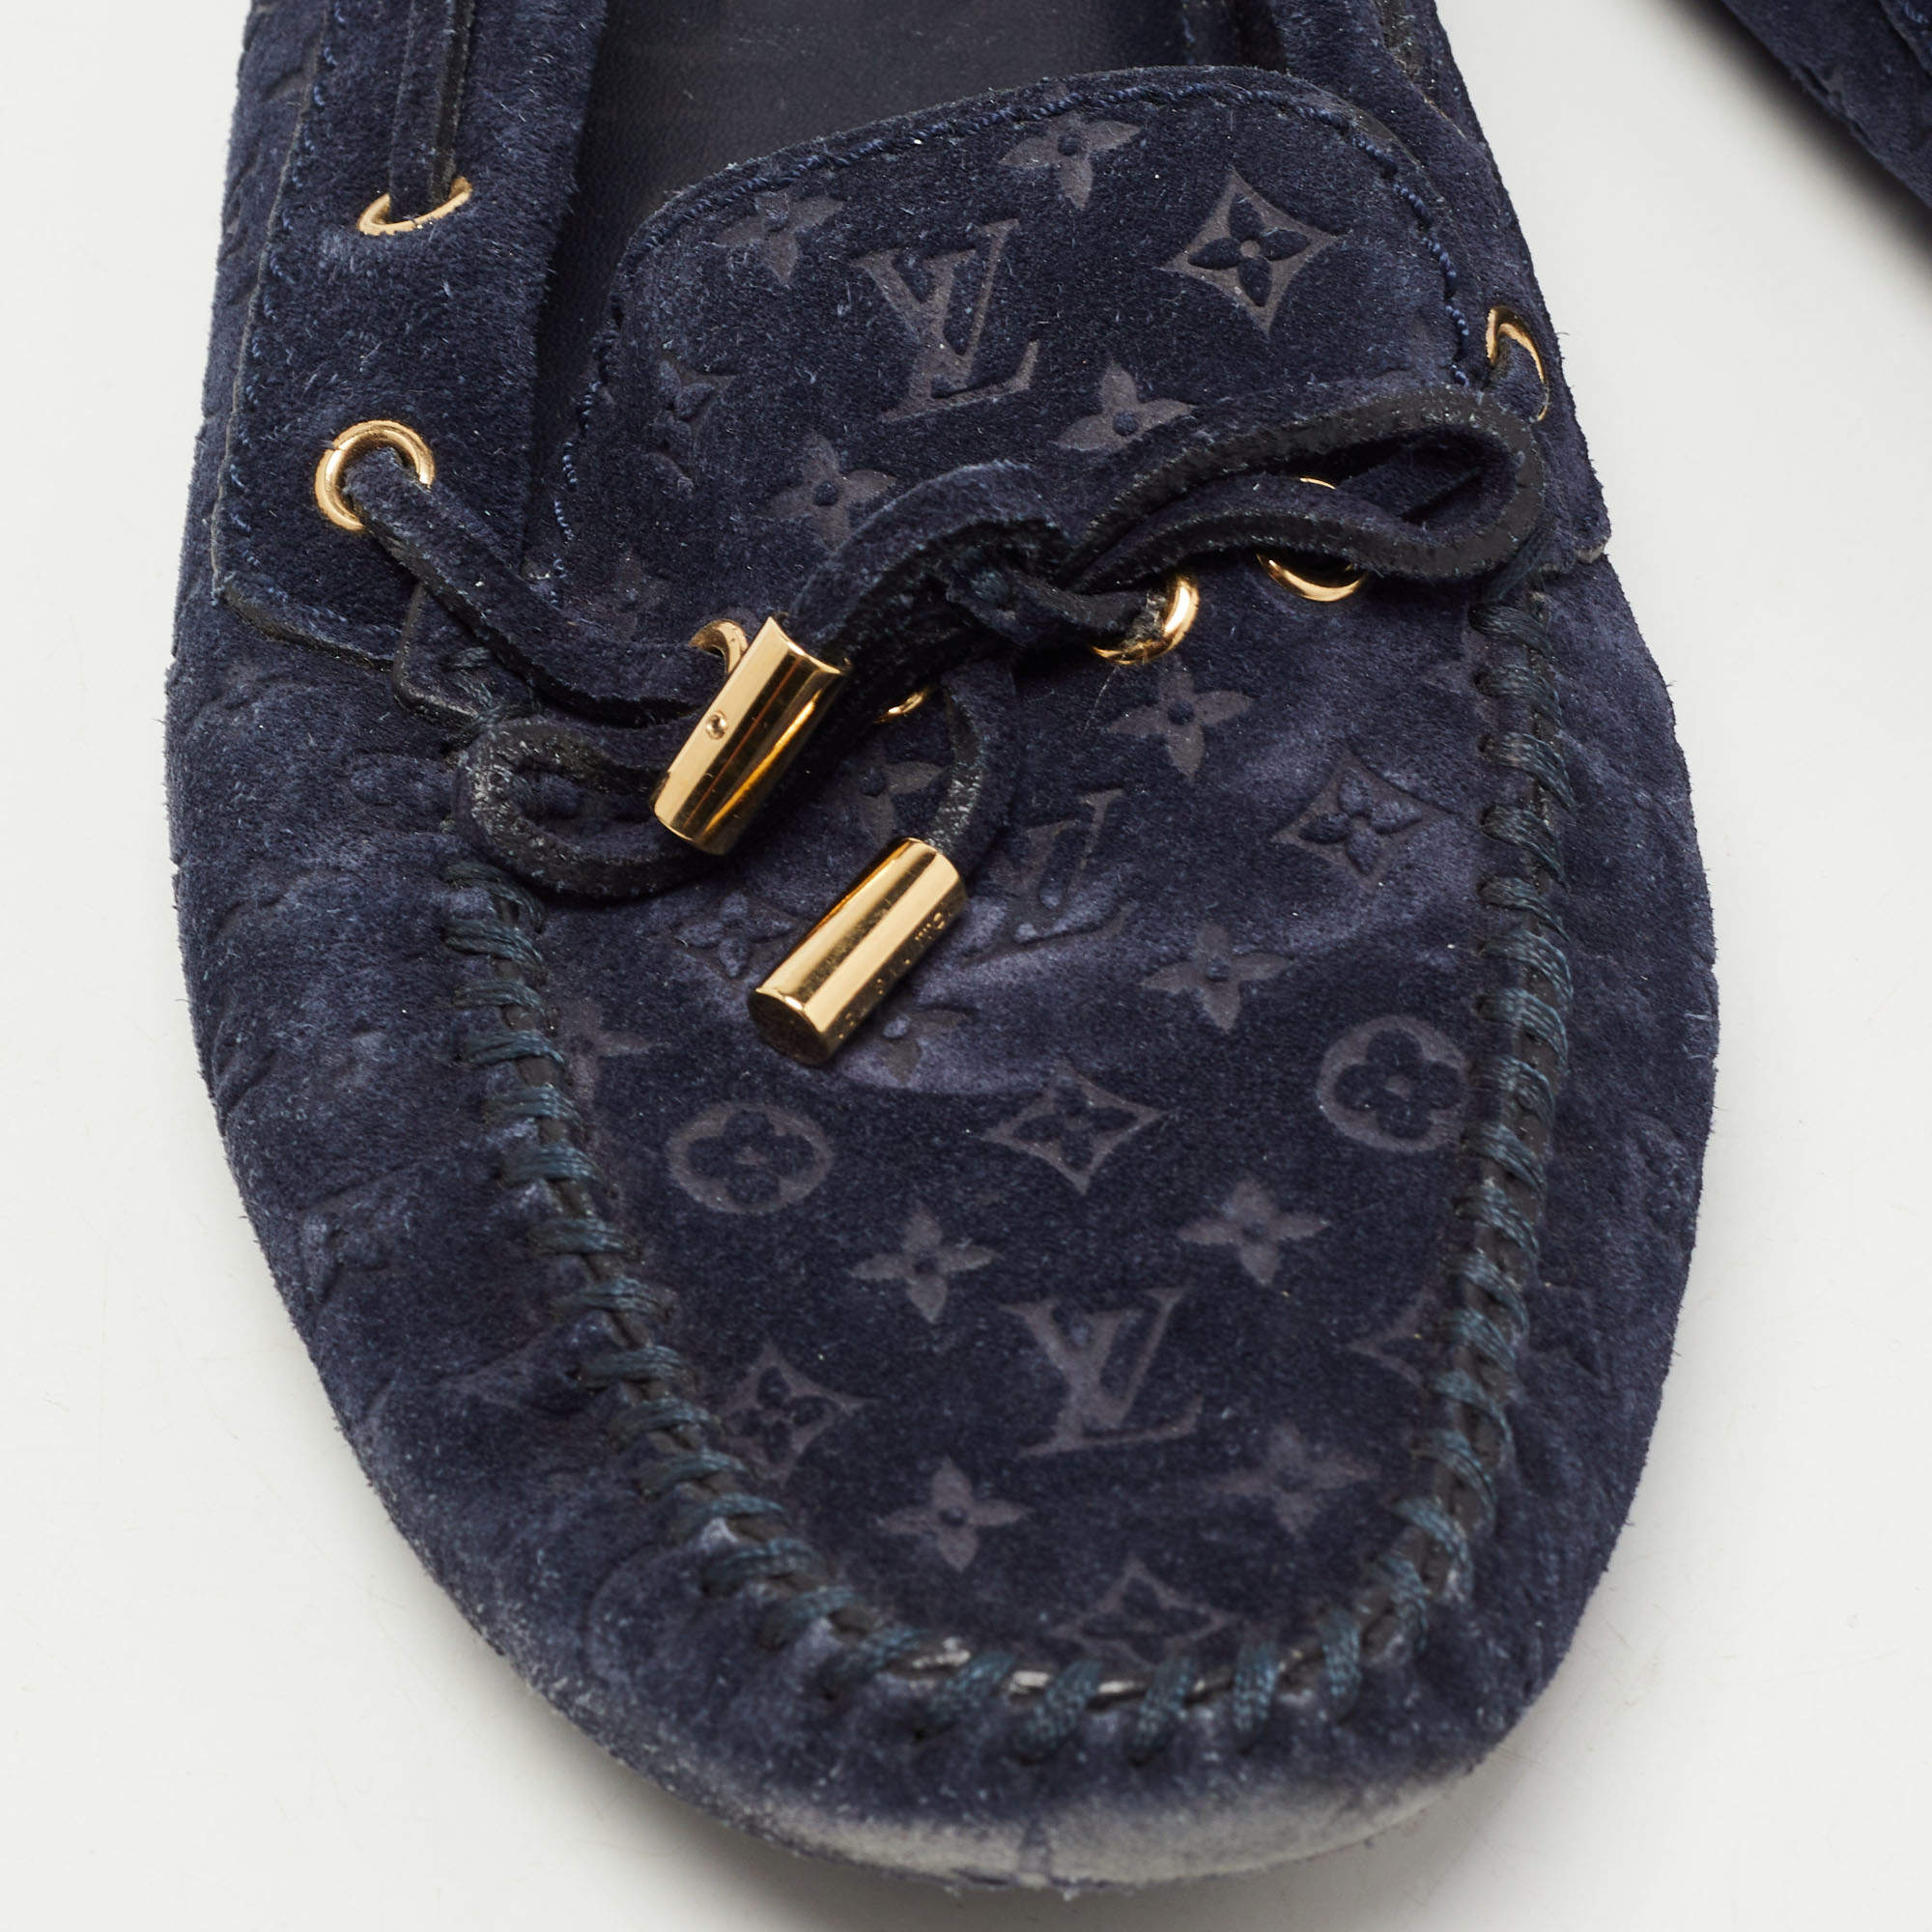 Louis Vuitton Blue Monogram Embossed Suede Gloria Flat Loafers